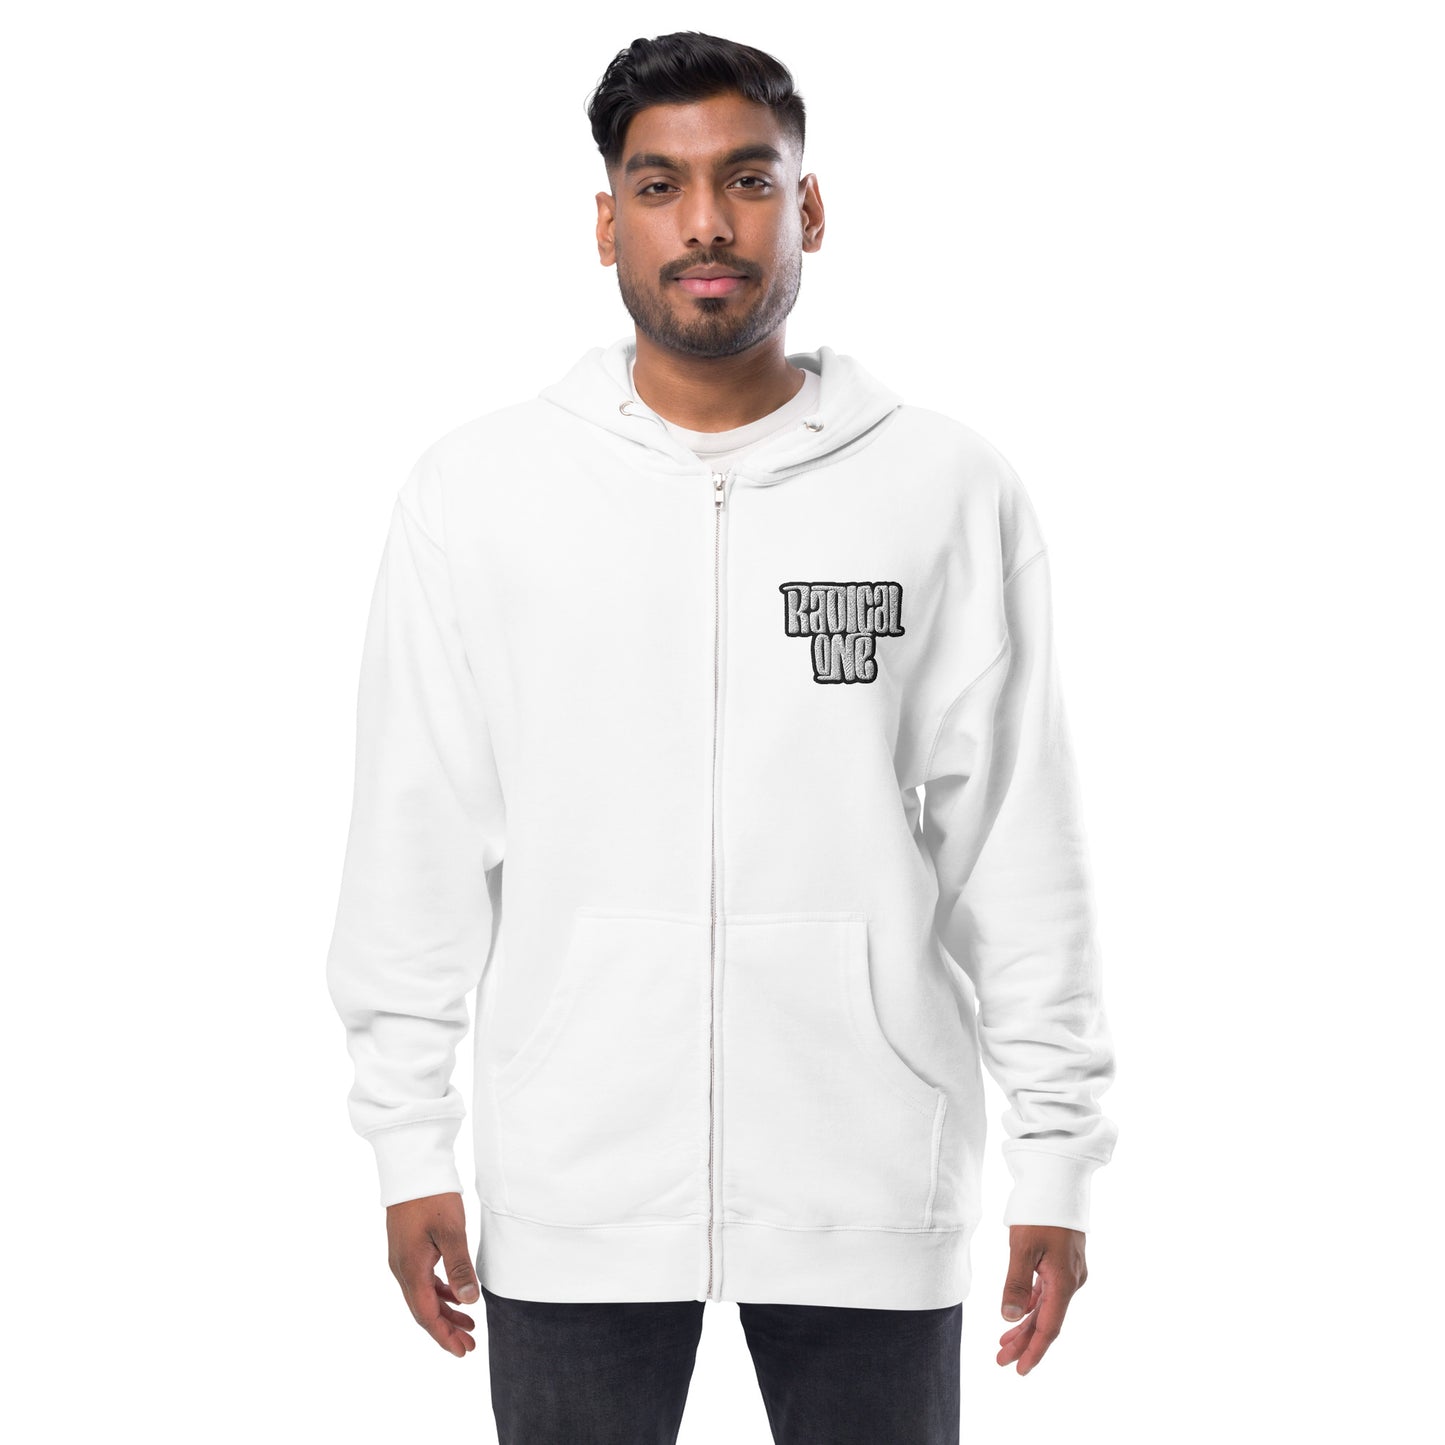 RADICAL ONE - Unisex fleece zip up  hoodie